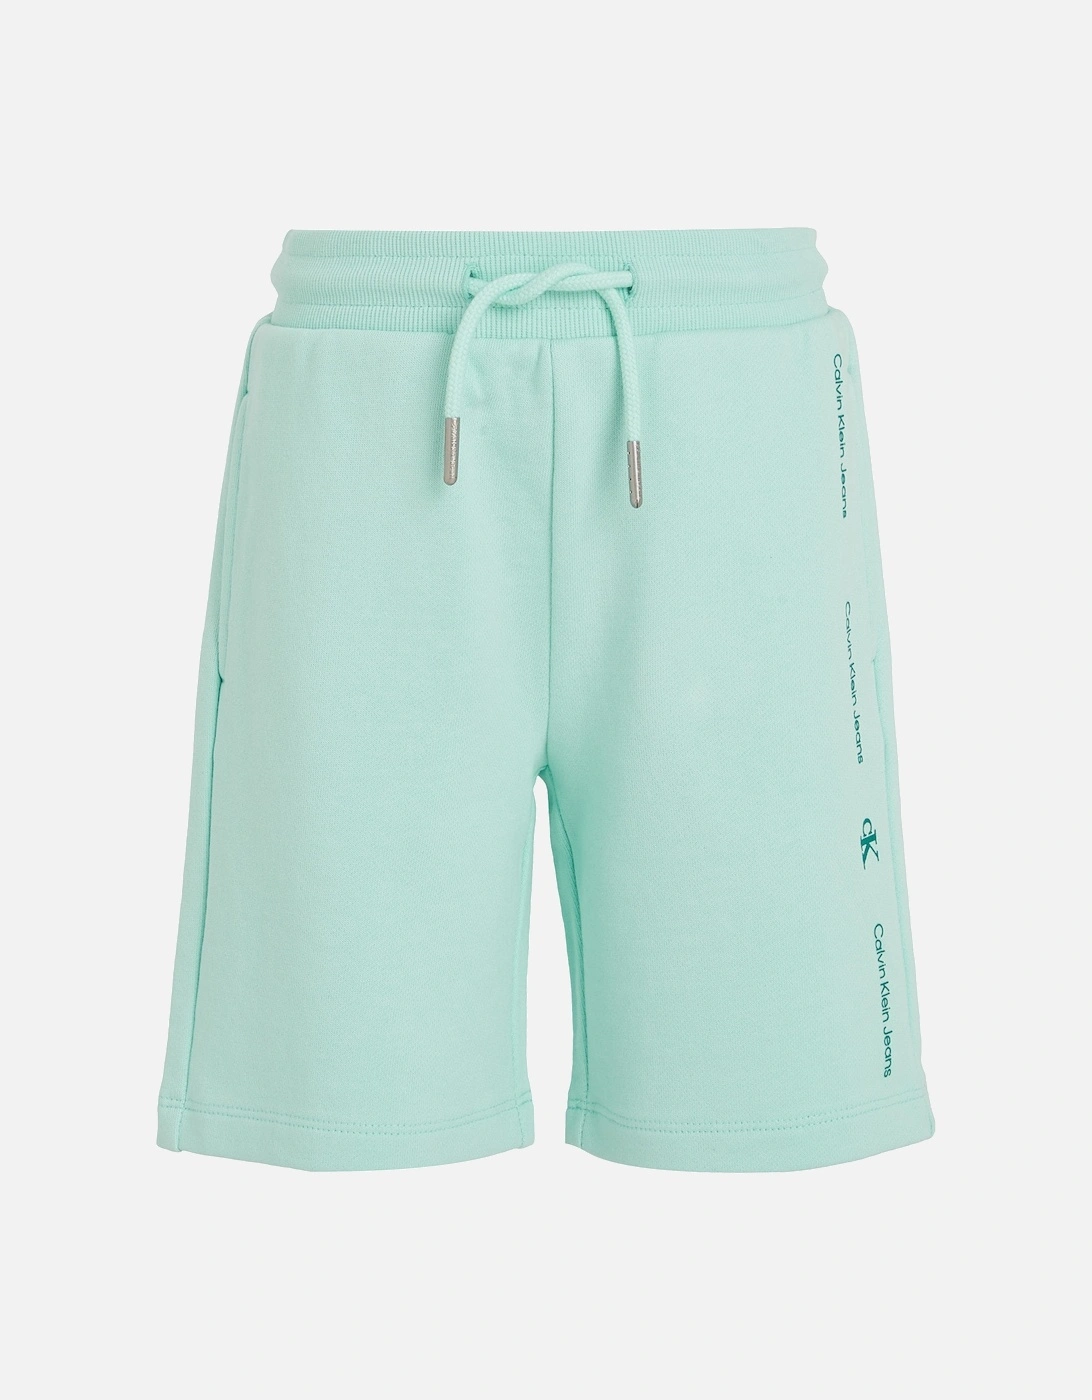 Juniors Minimalistic Shorts (Turquoise), 7 of 6